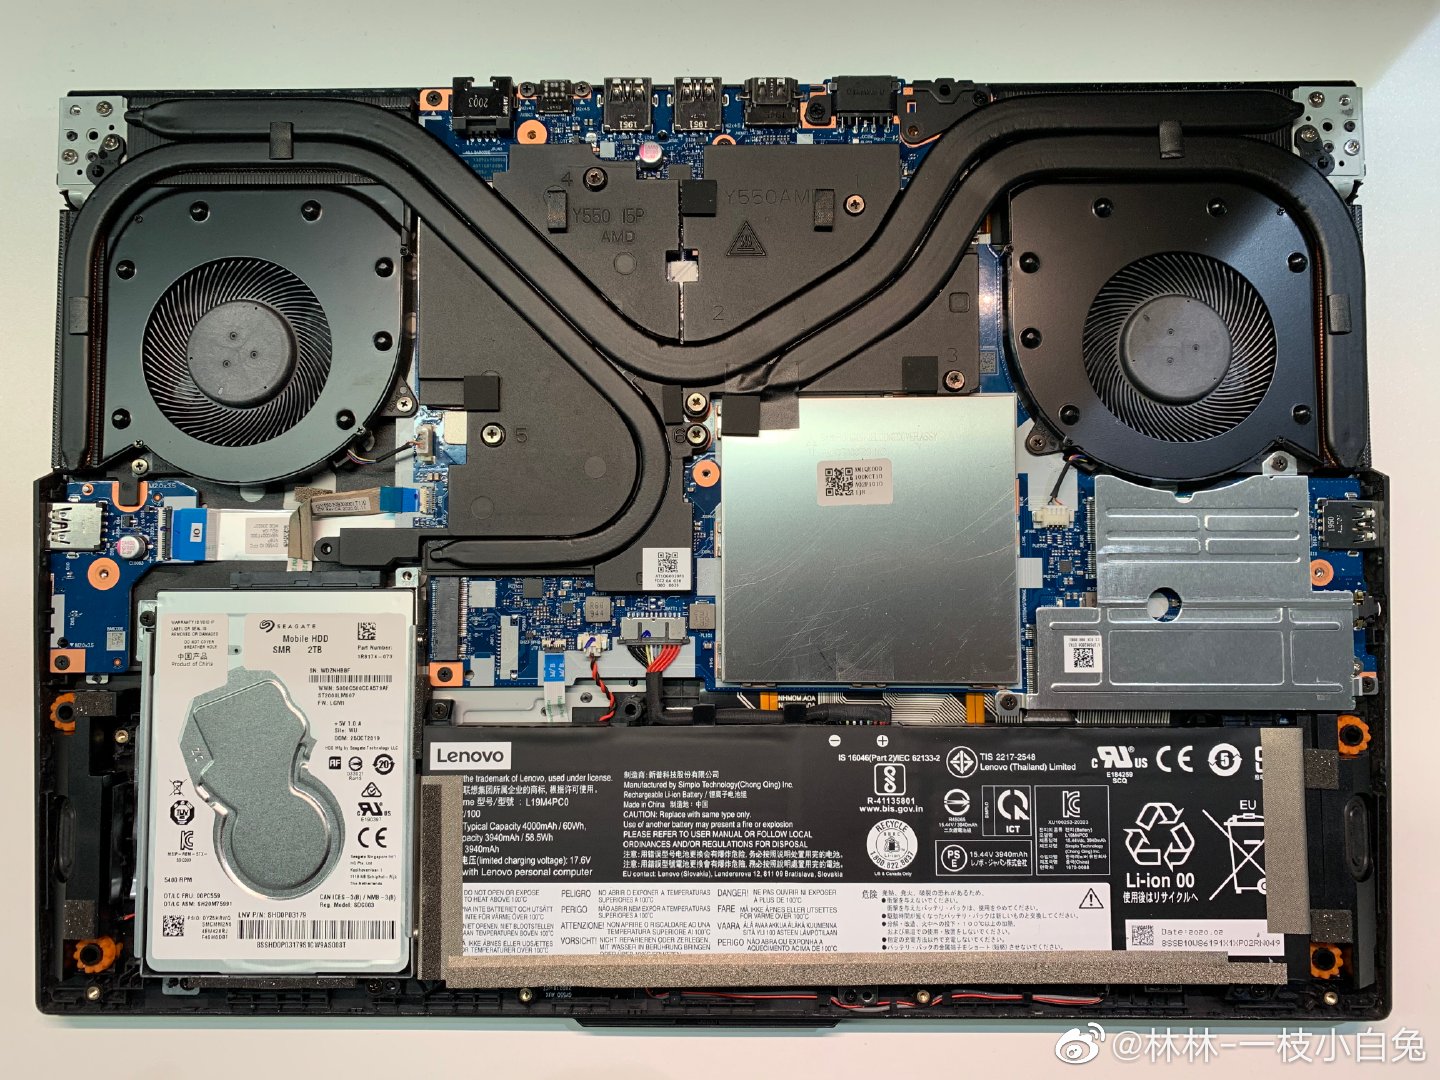 Lenovo Legion 5 Disassembly (RAM, M.2 SSD, HDD upgrade options)